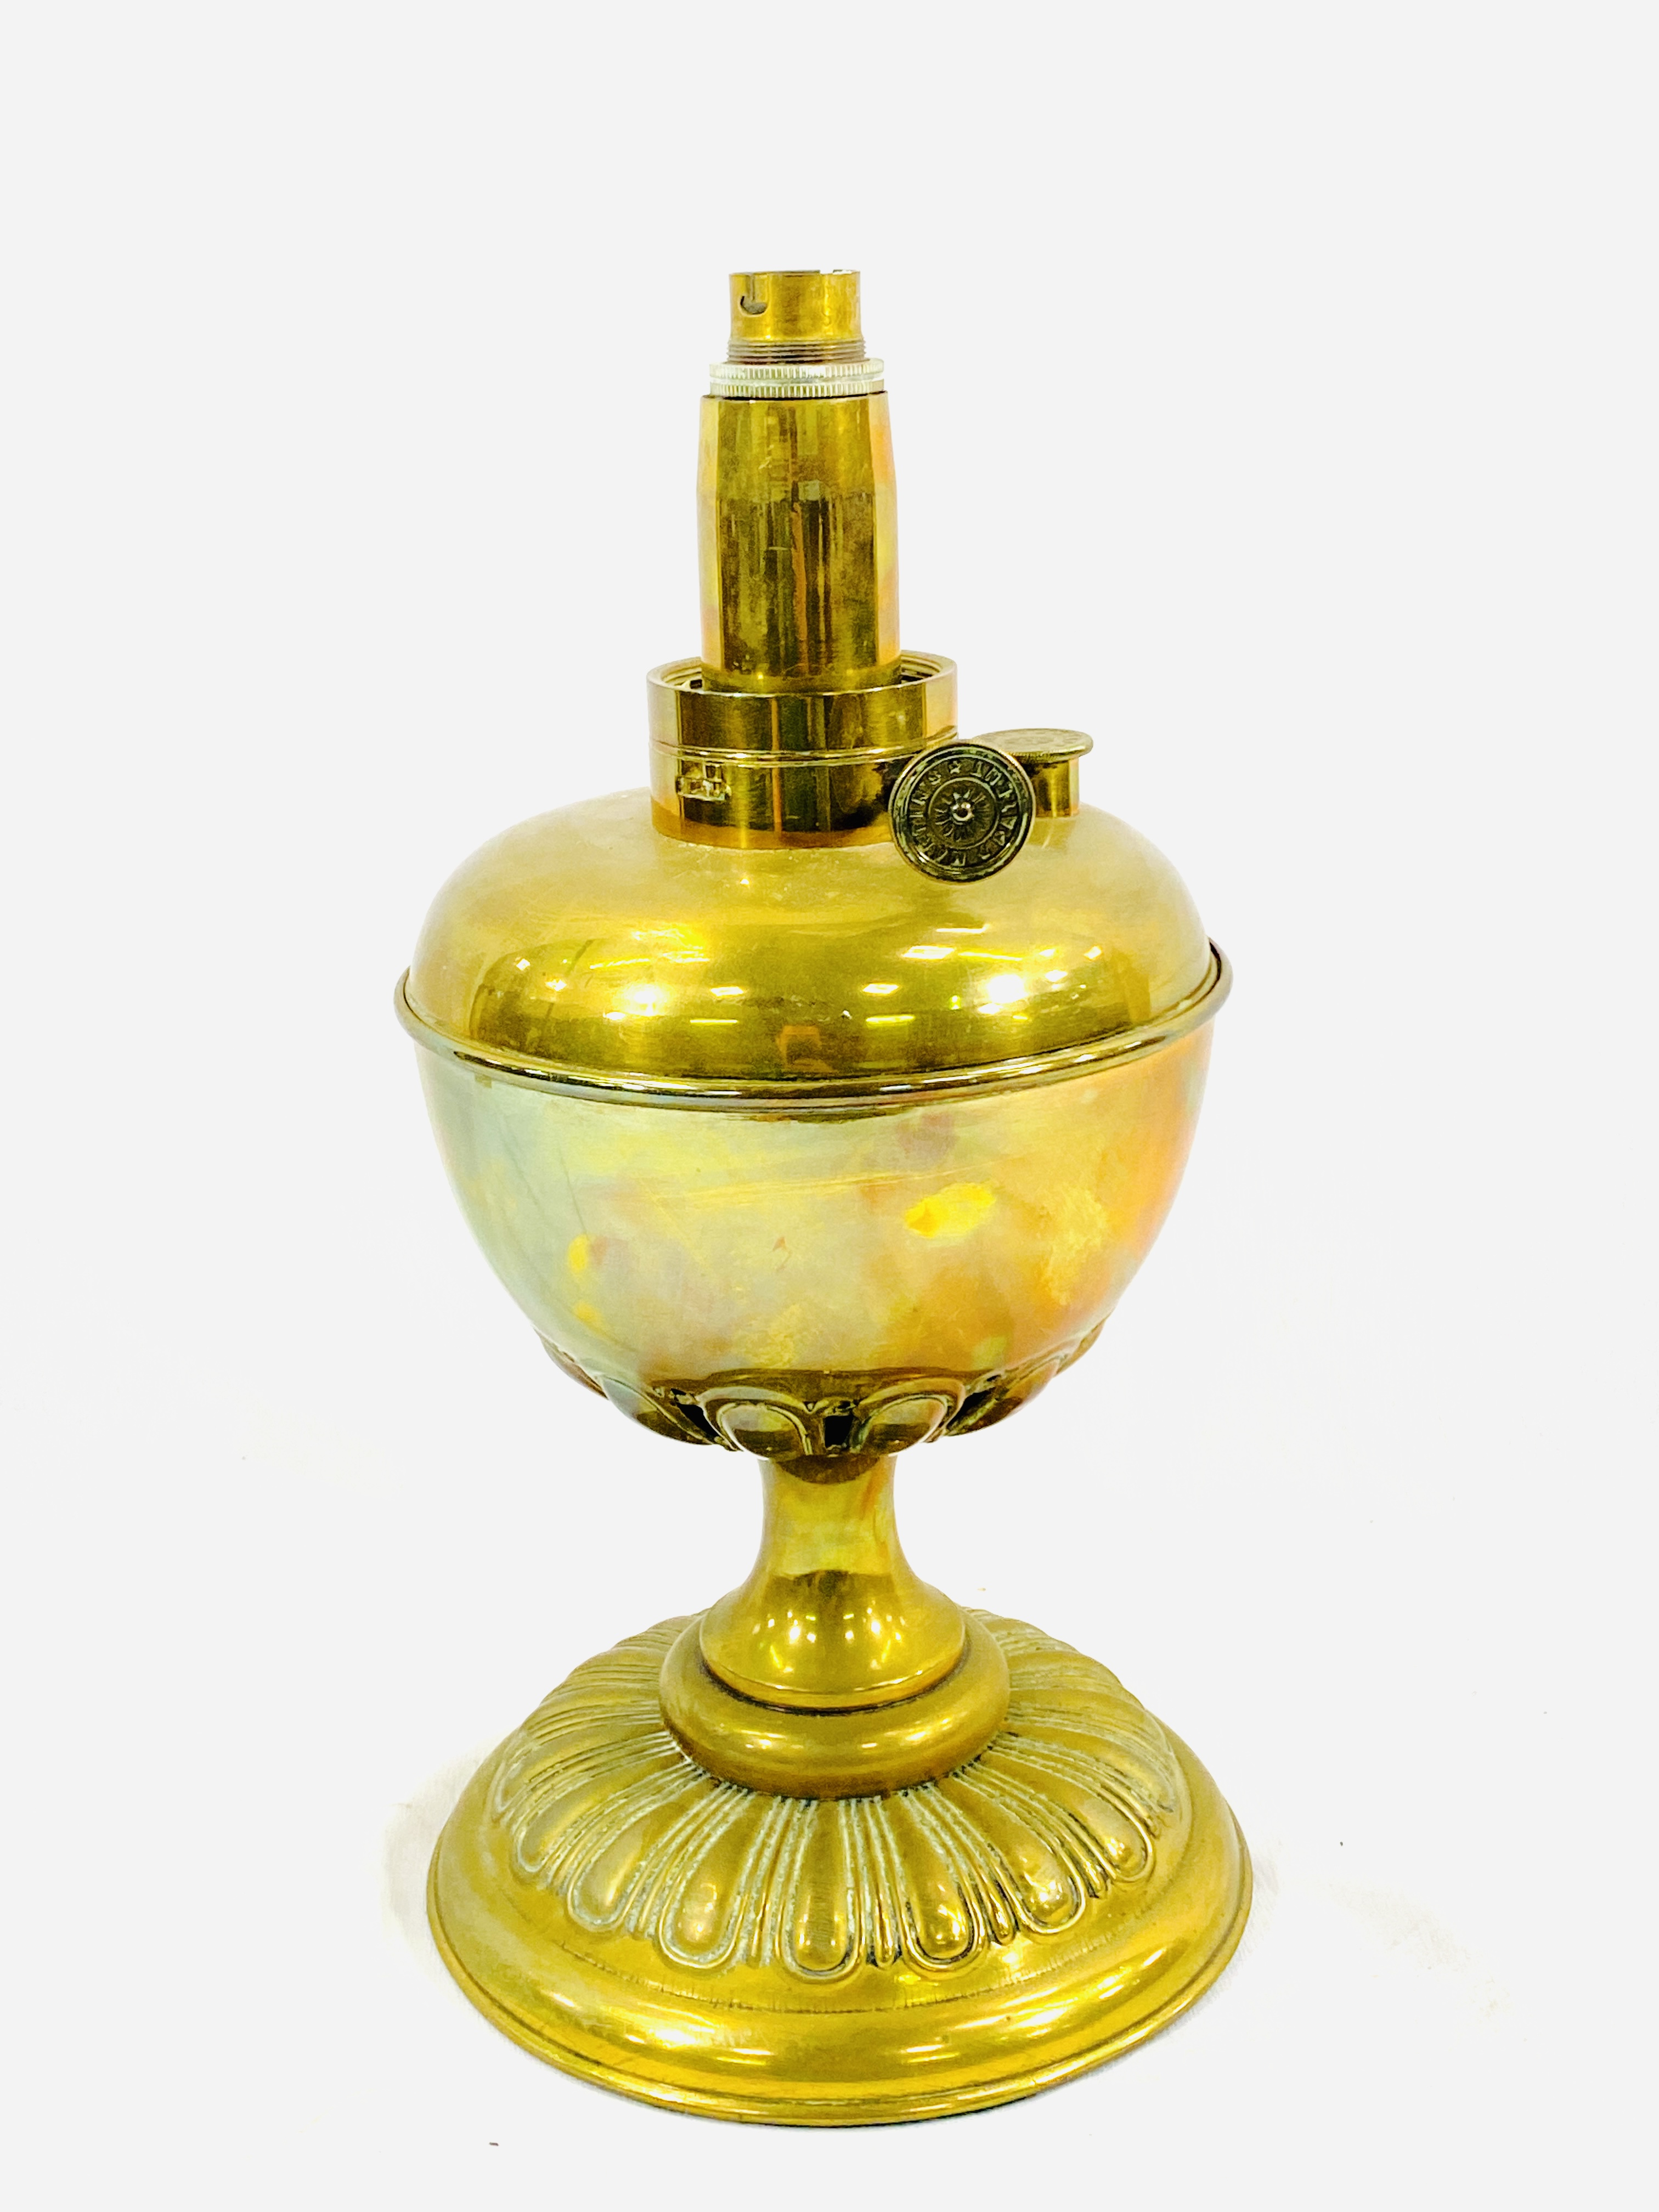 Brass lamp - Image 3 of 3